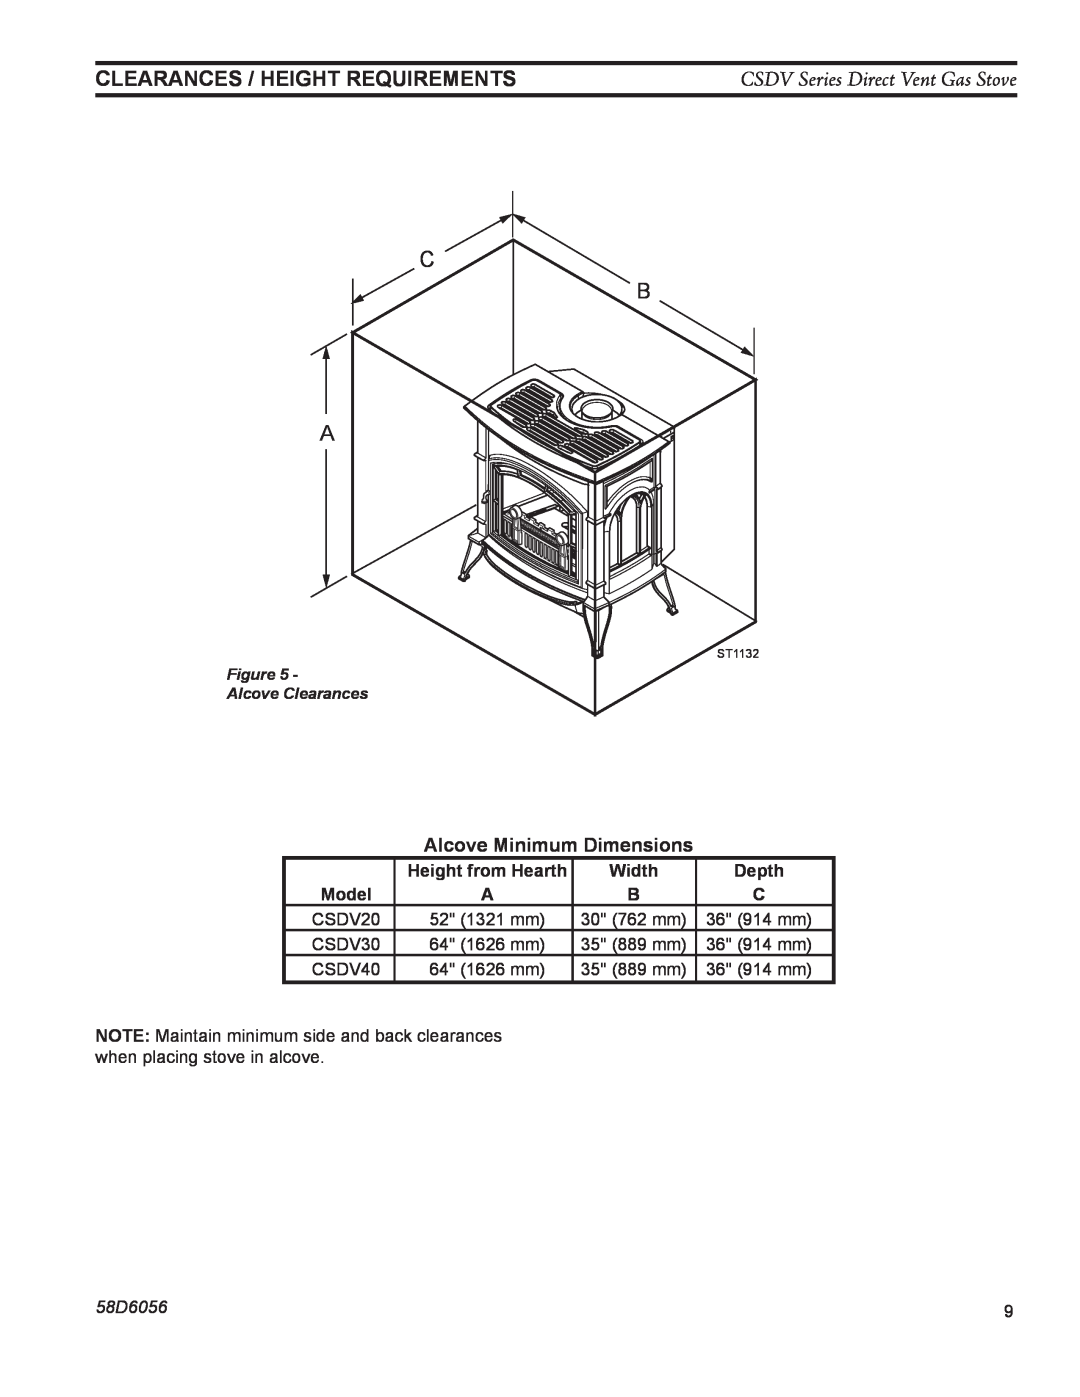 Monessen Hearth CSDV30DNV clearances / Height Requirements, Alcove Minimum Dimensions, CSDV Series Direct Vent Gas Stove 